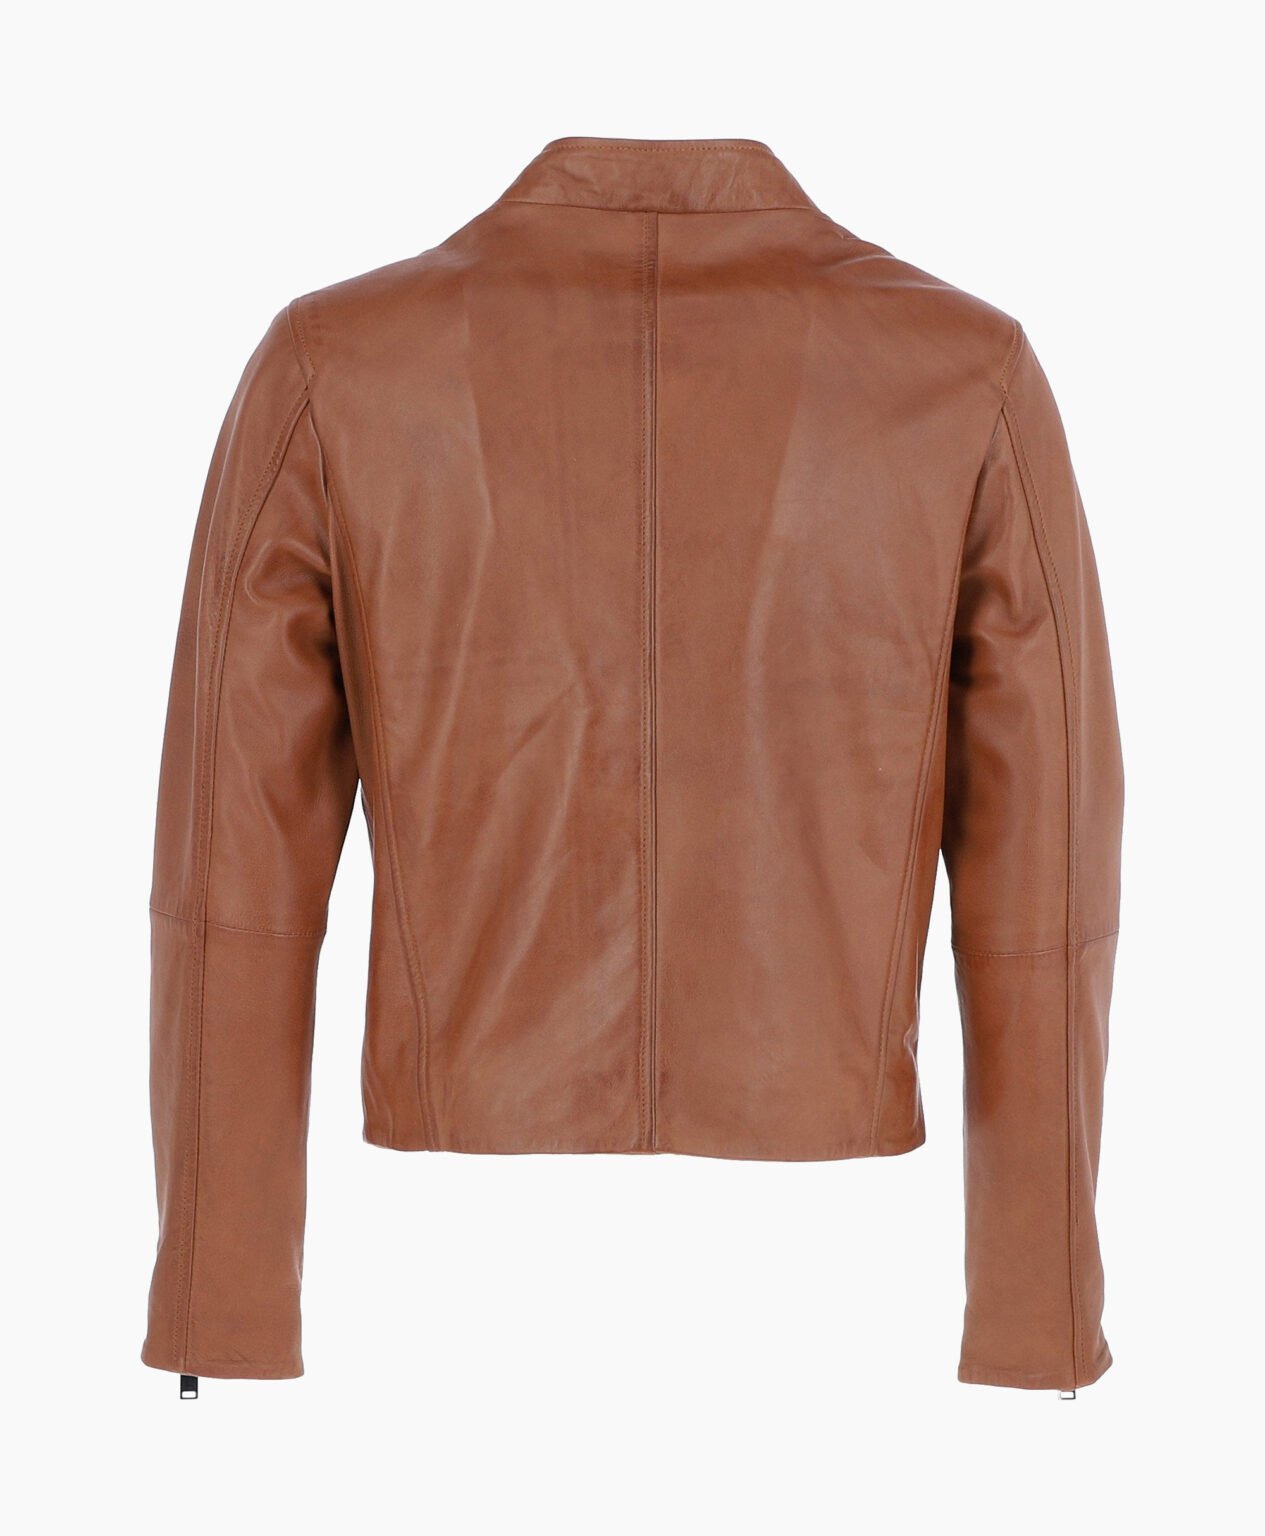 vogue-jacket-leather-biker-jacket-tan-logan-image202